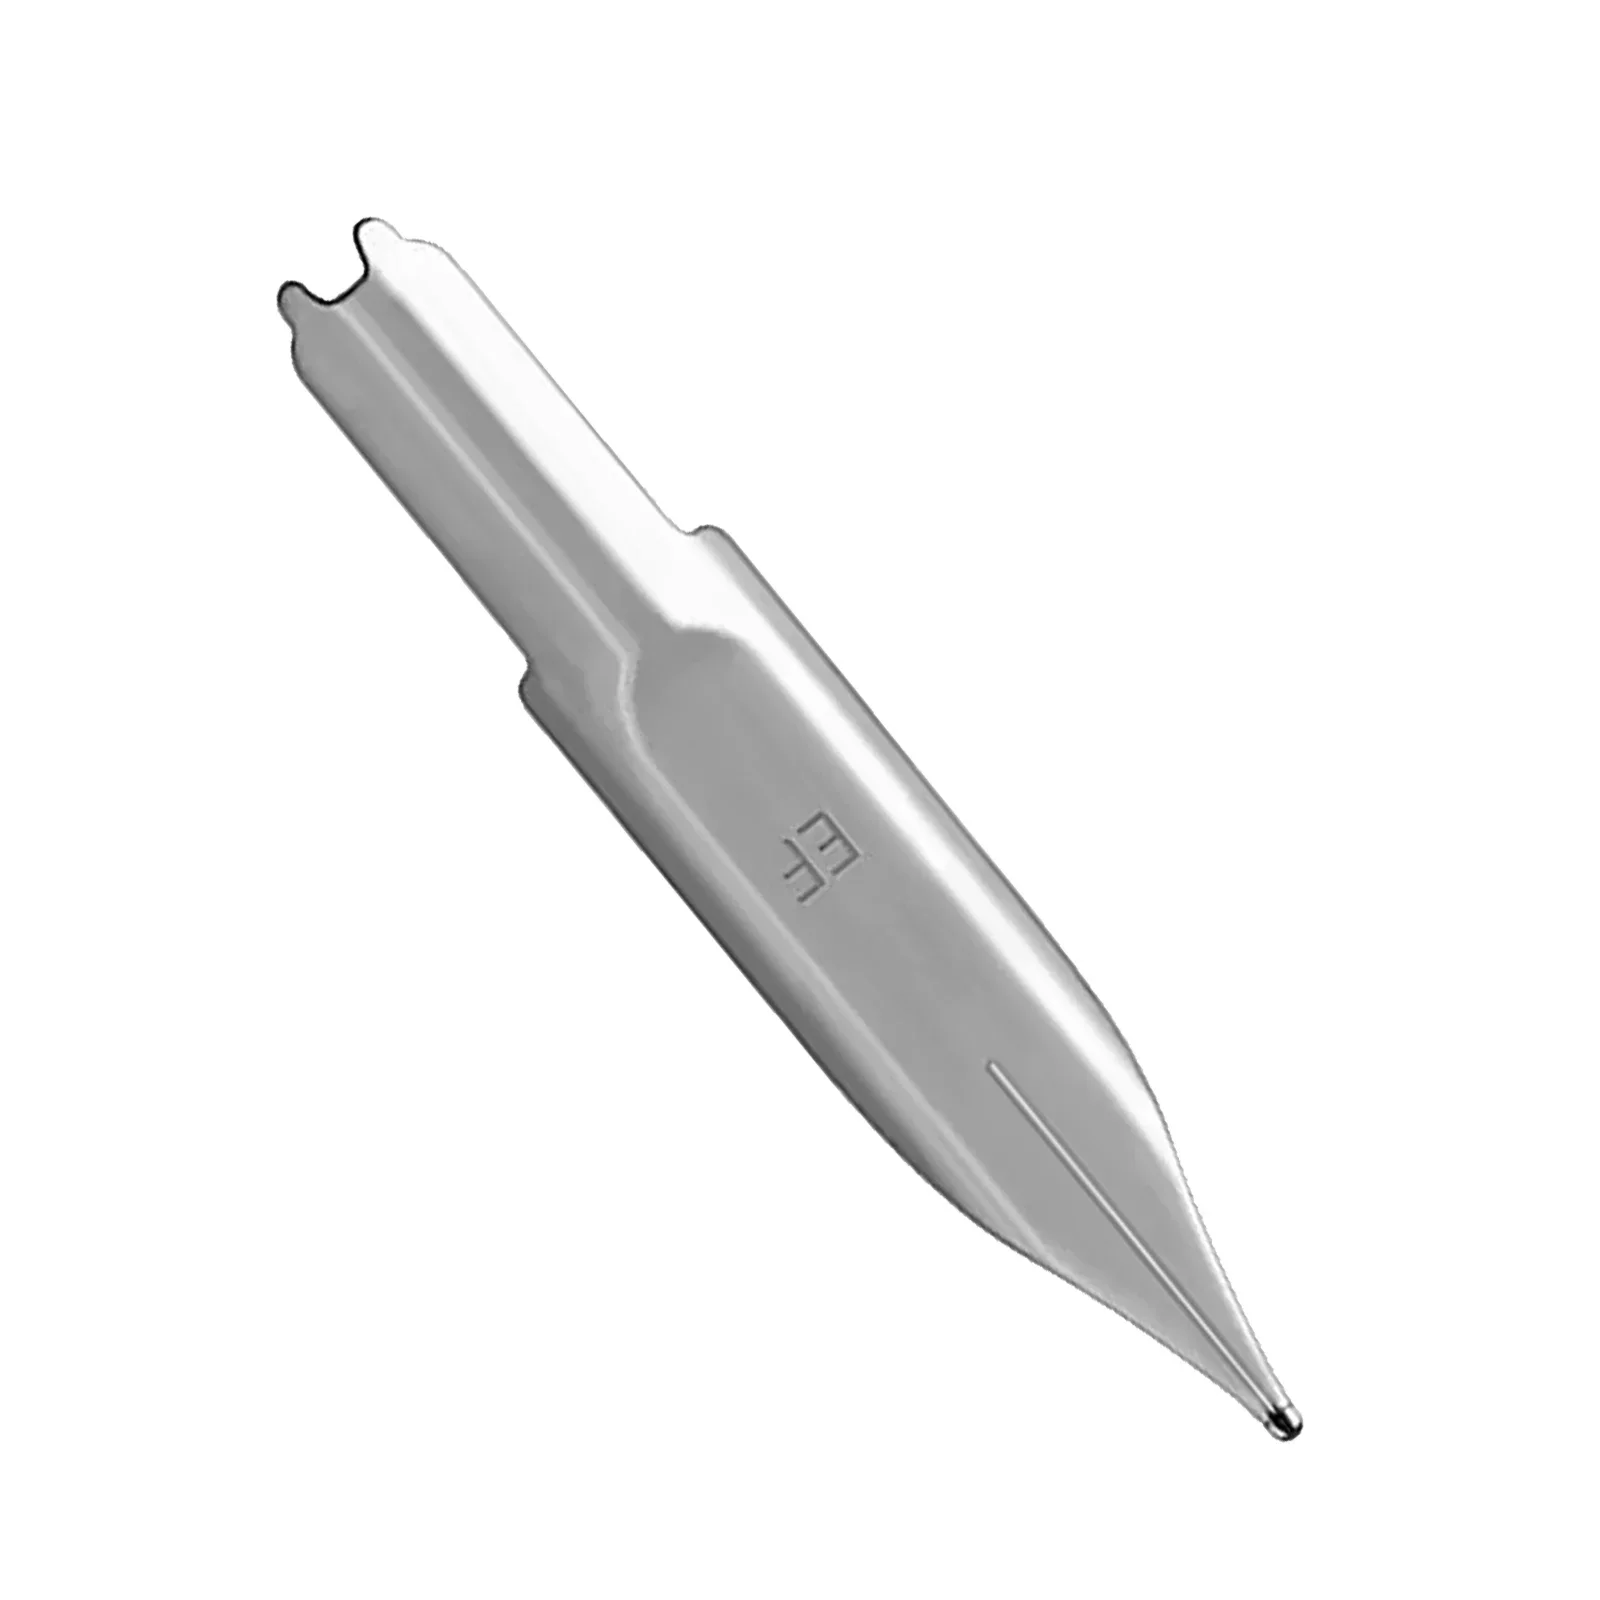 Nib Fountain Pen Replacement, EF Nib, 0.4mm, Nibs for MAJOHN A2, A1, Press Resin, Writing Supplies, Papelaria, Original